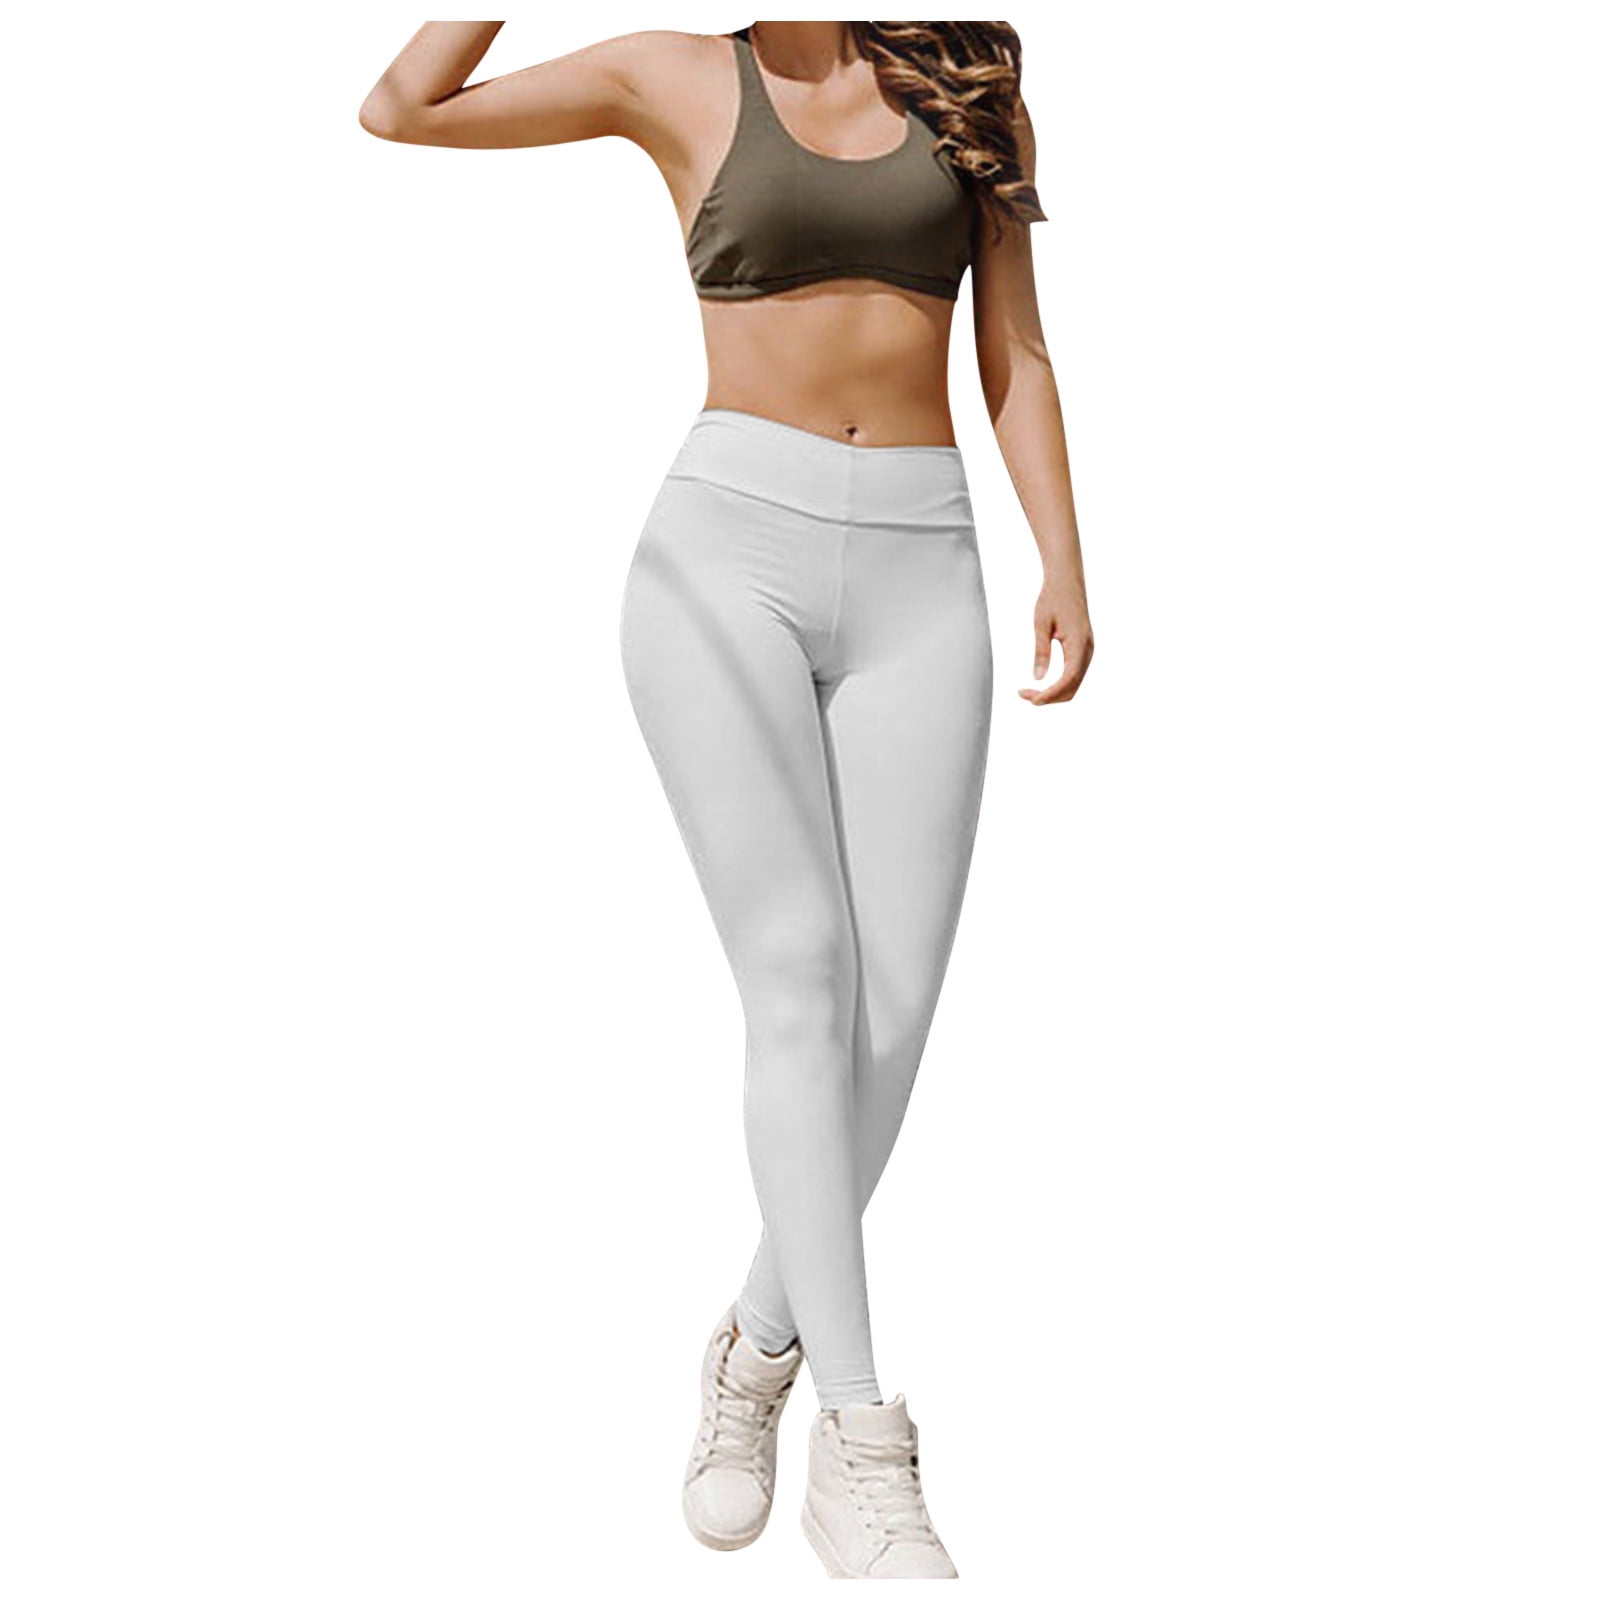 xinqinghao yoga leggings for women ladies high waist fitness pants